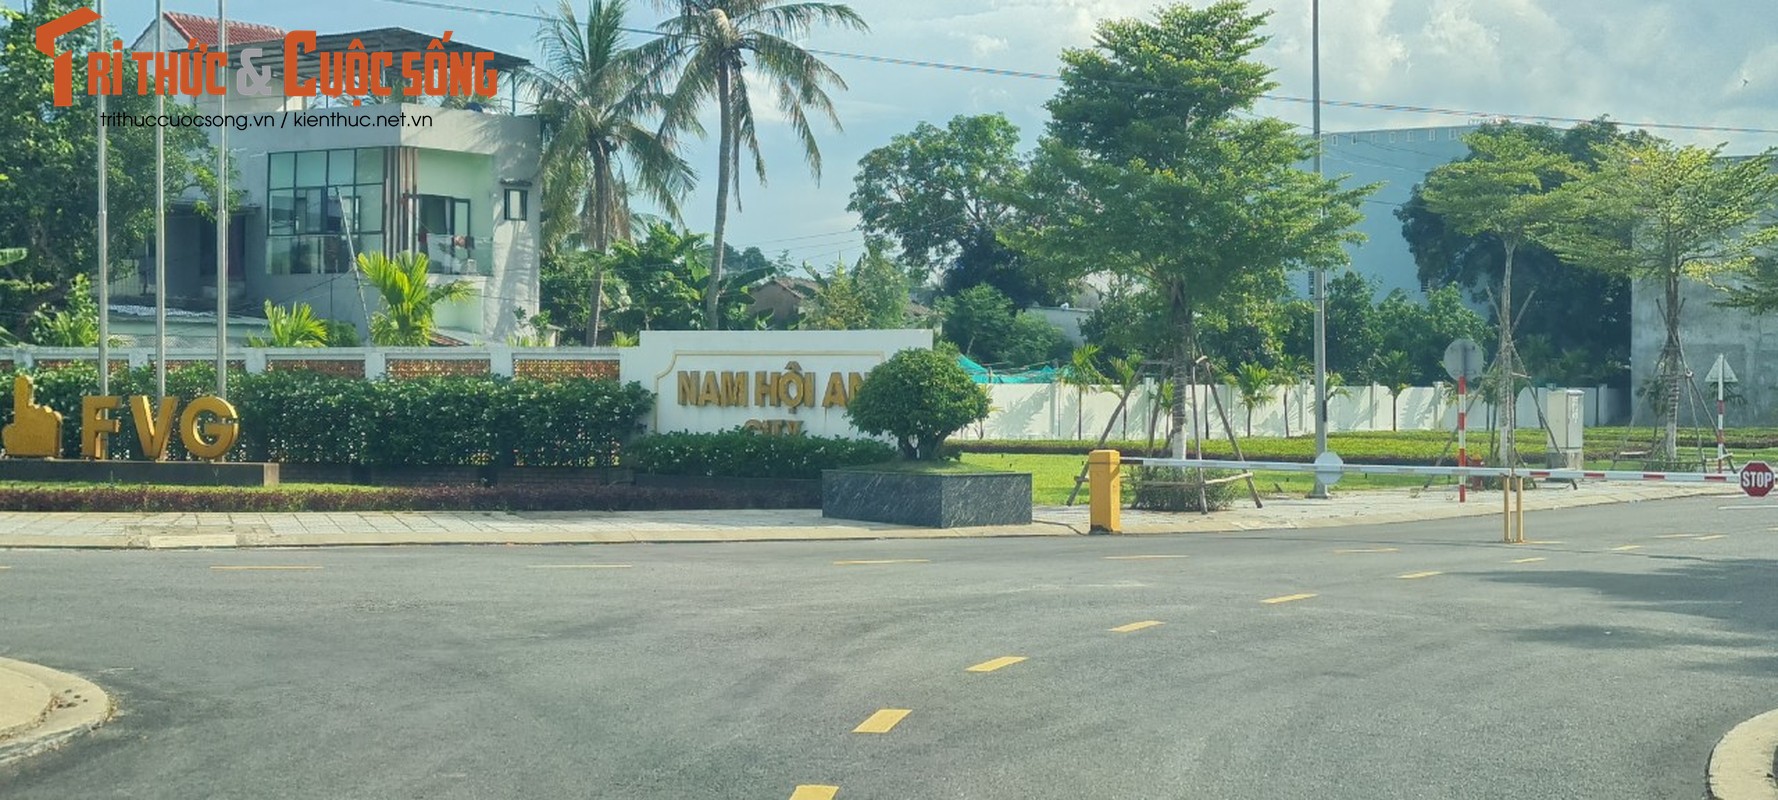 Nam Hoi An City -  “pho Tay giua long di san” gio ra sao?